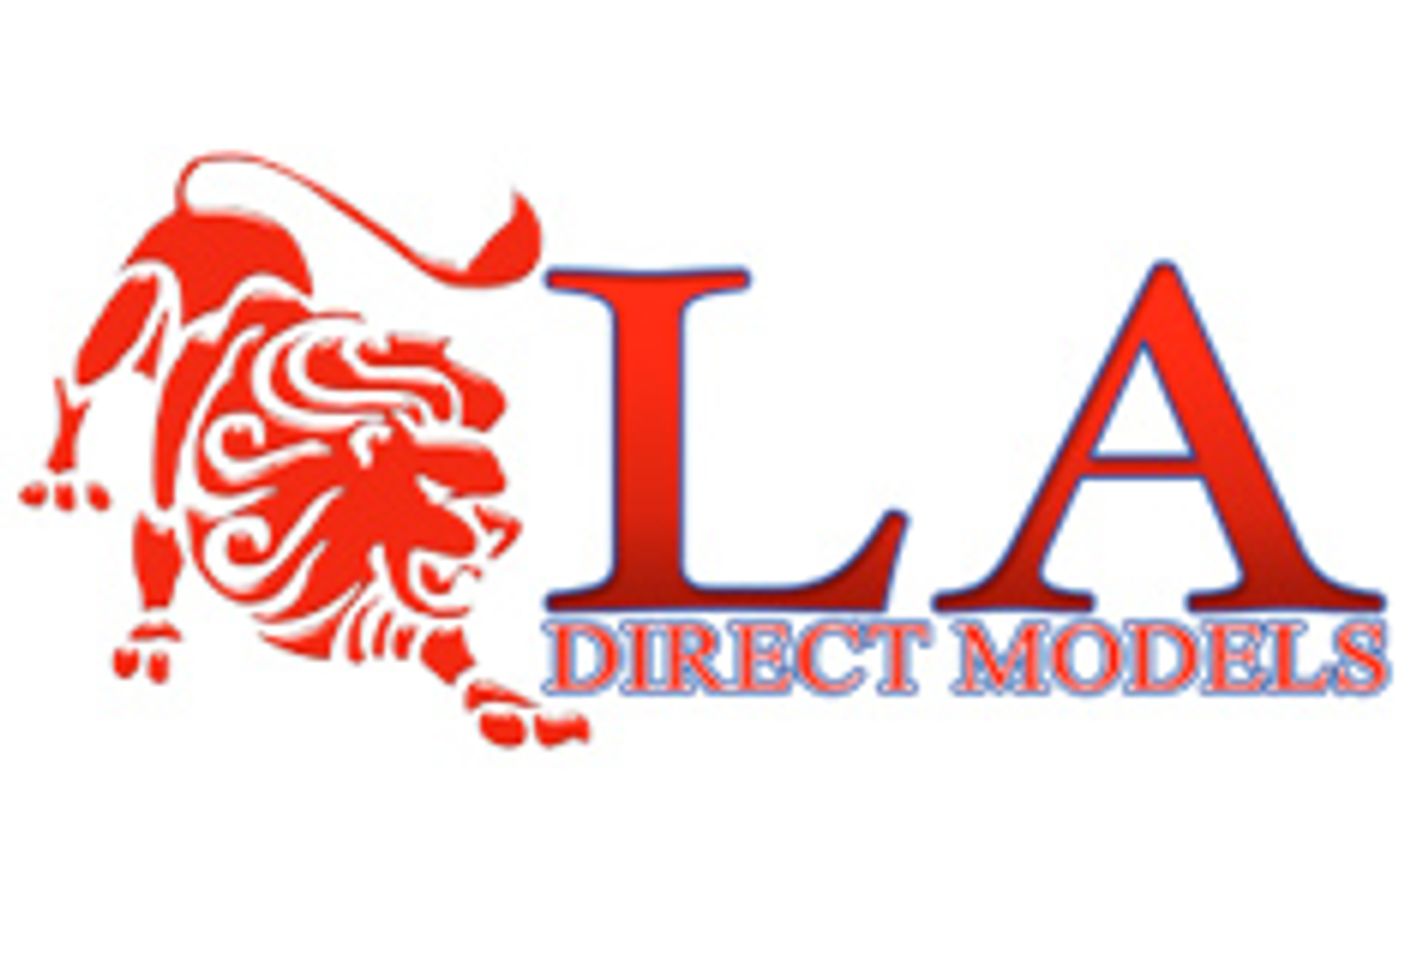 Teal Conrad Signing for LA Direct Models at AEE